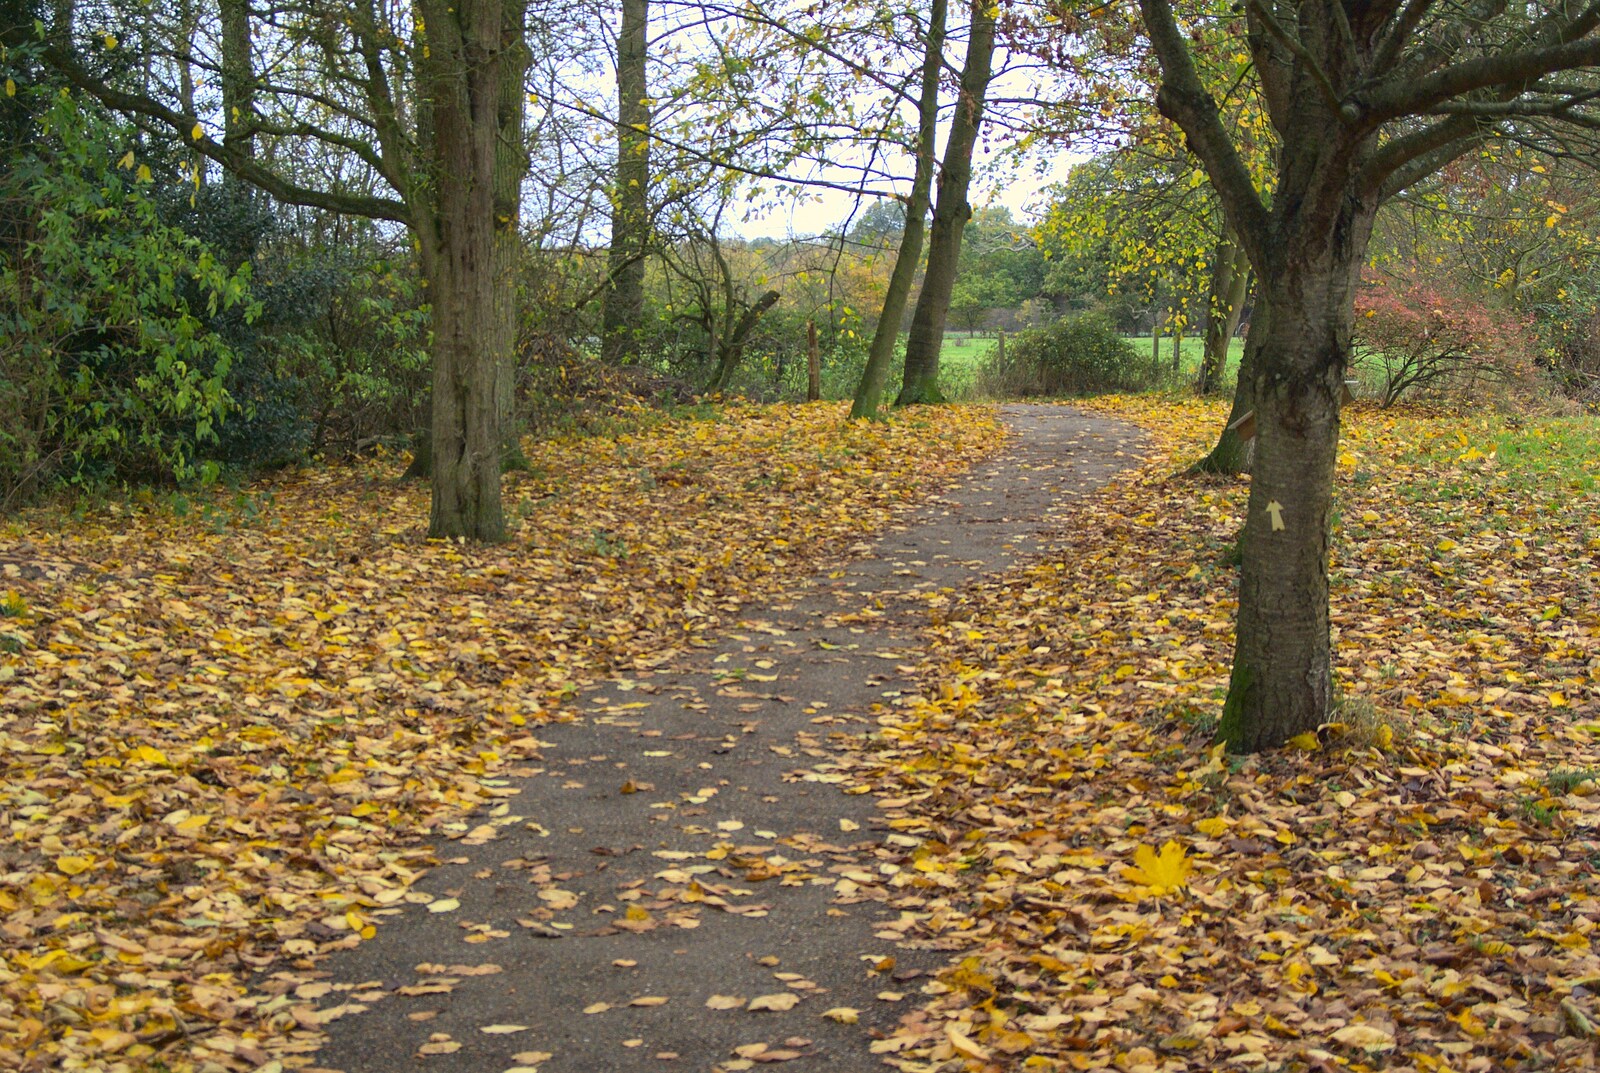 A leafy autumnal path through Thornham Walks from Autumn in Thornham Estate, Thornham, Suffolk - 6th November 2011